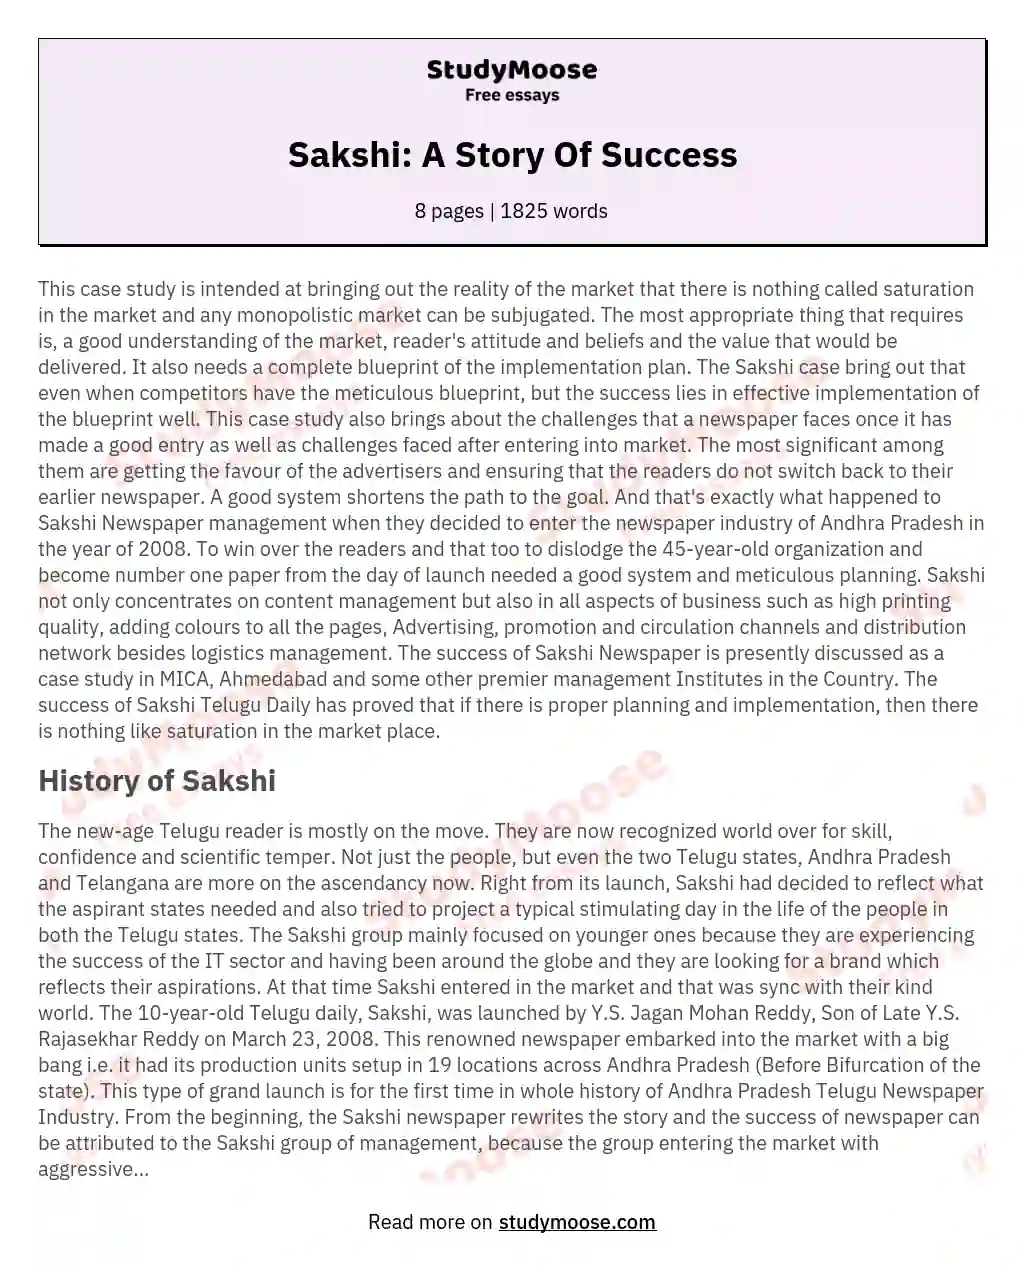 Sakshi: A Story Of Success essay